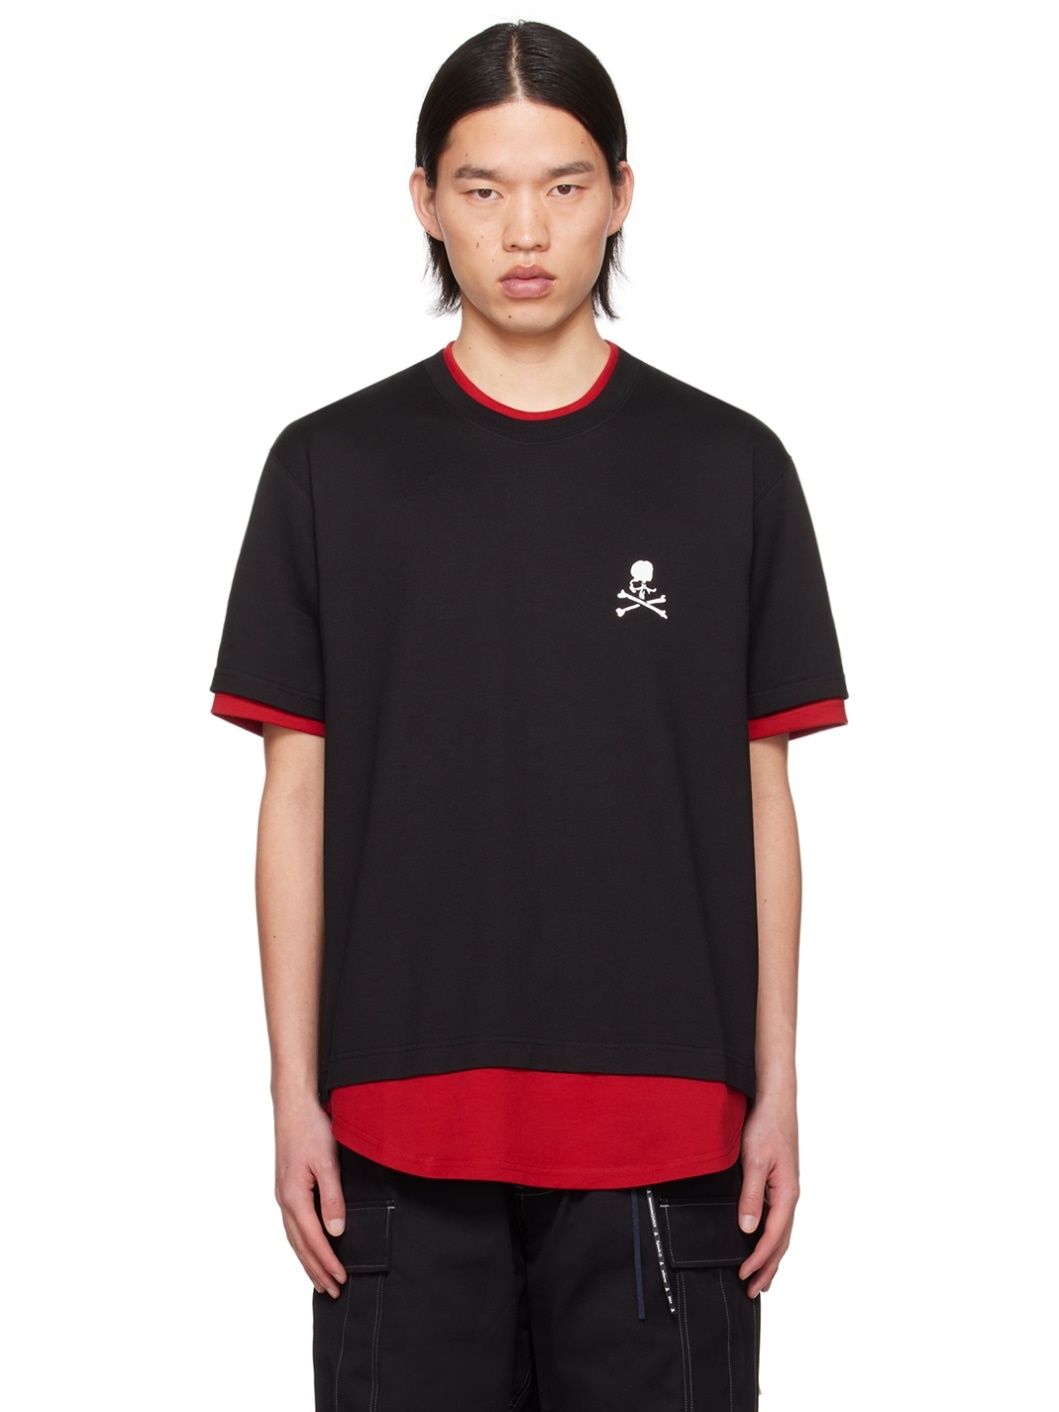 Black & Red Layered T-Shirt - 1